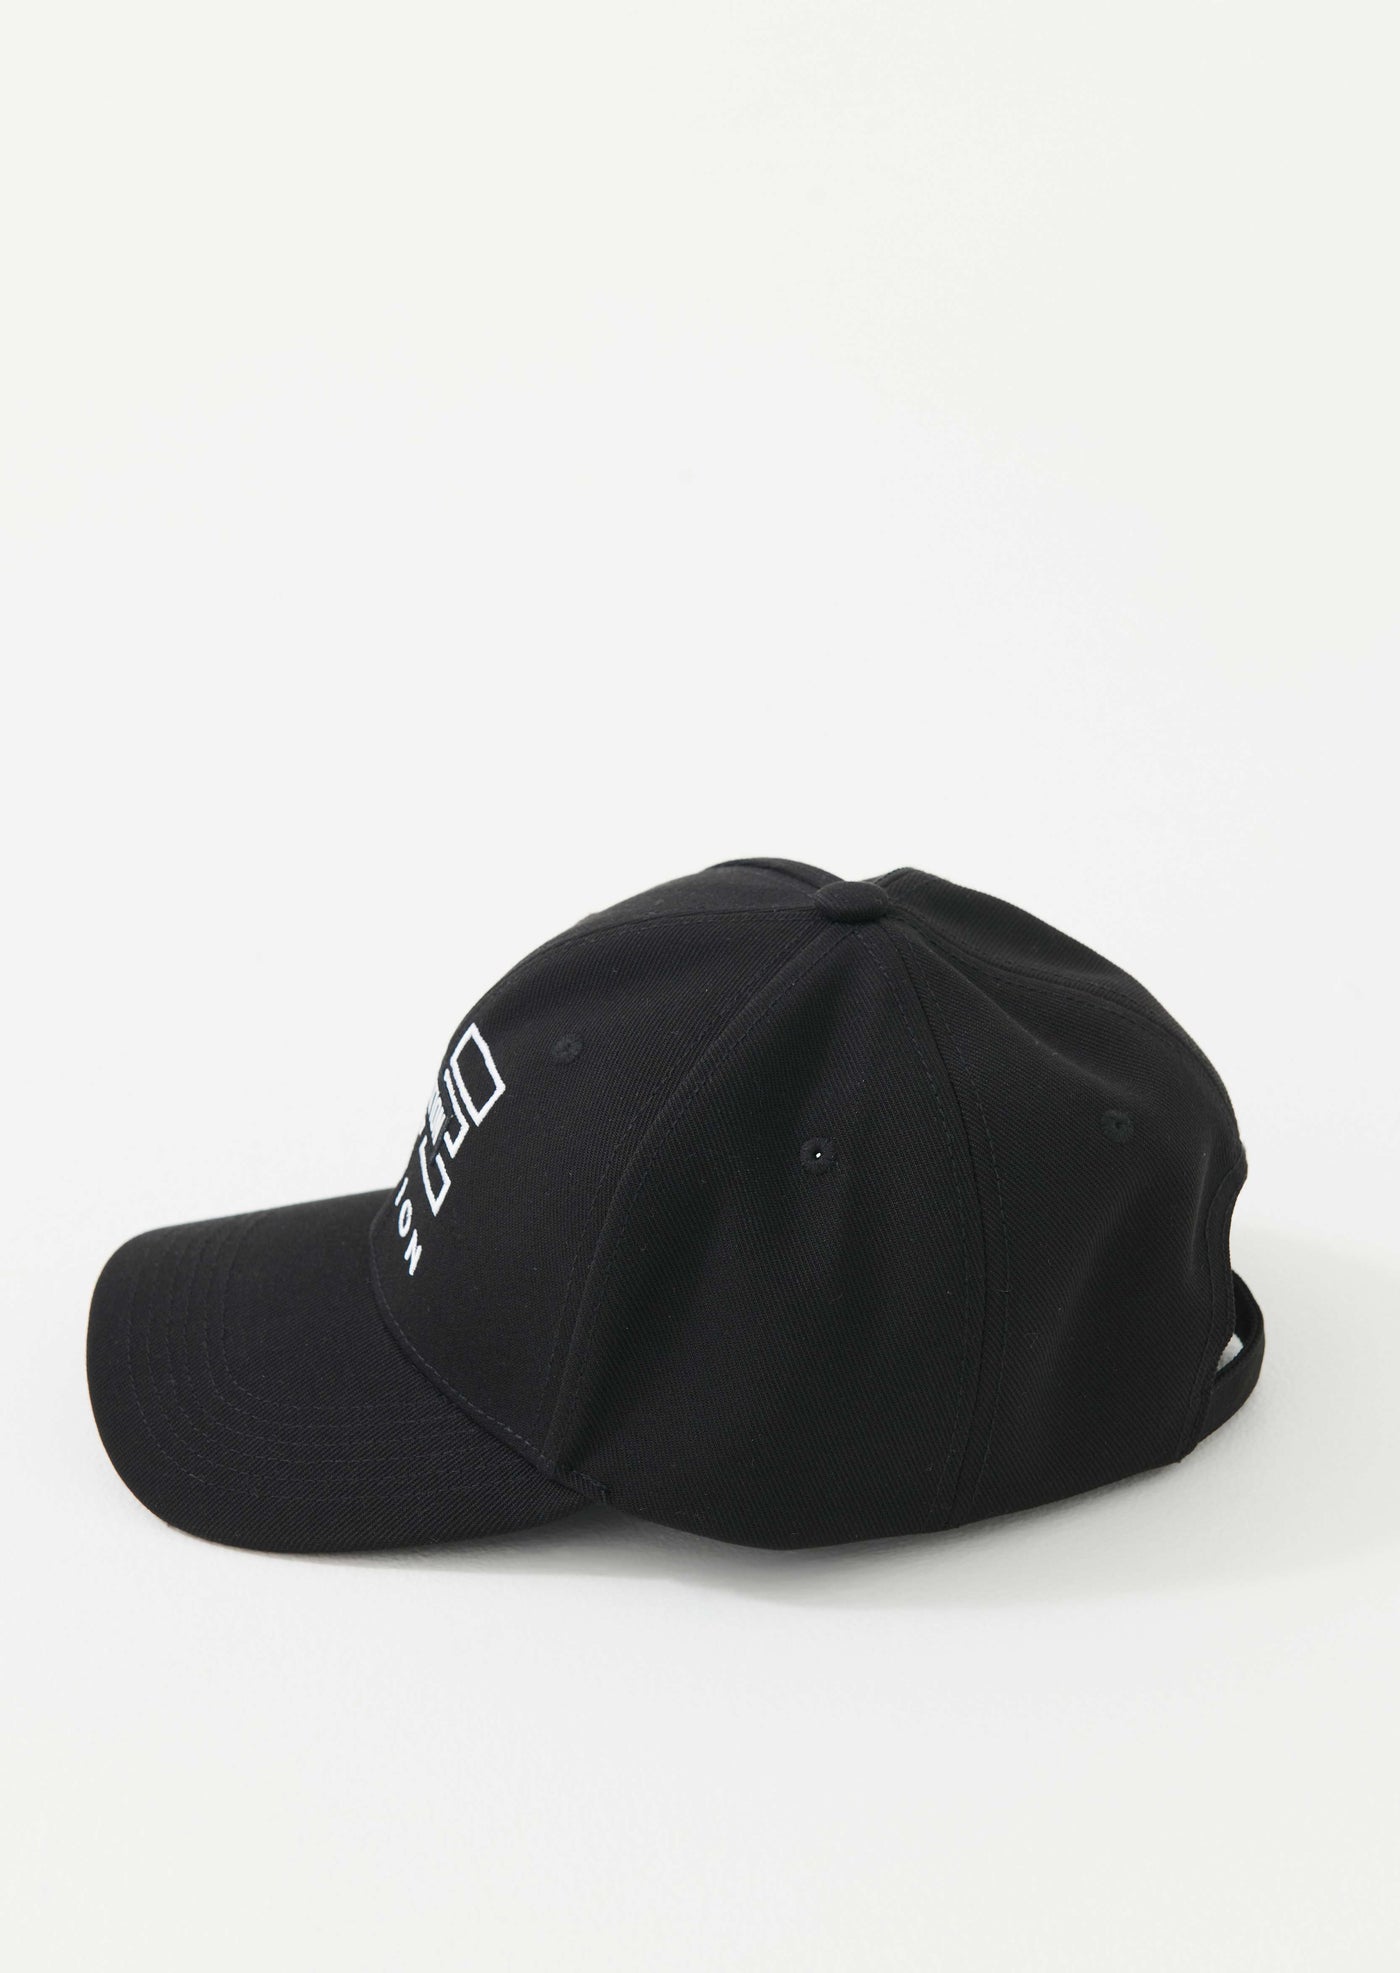 FRONTSIDE CAP IN BLACK